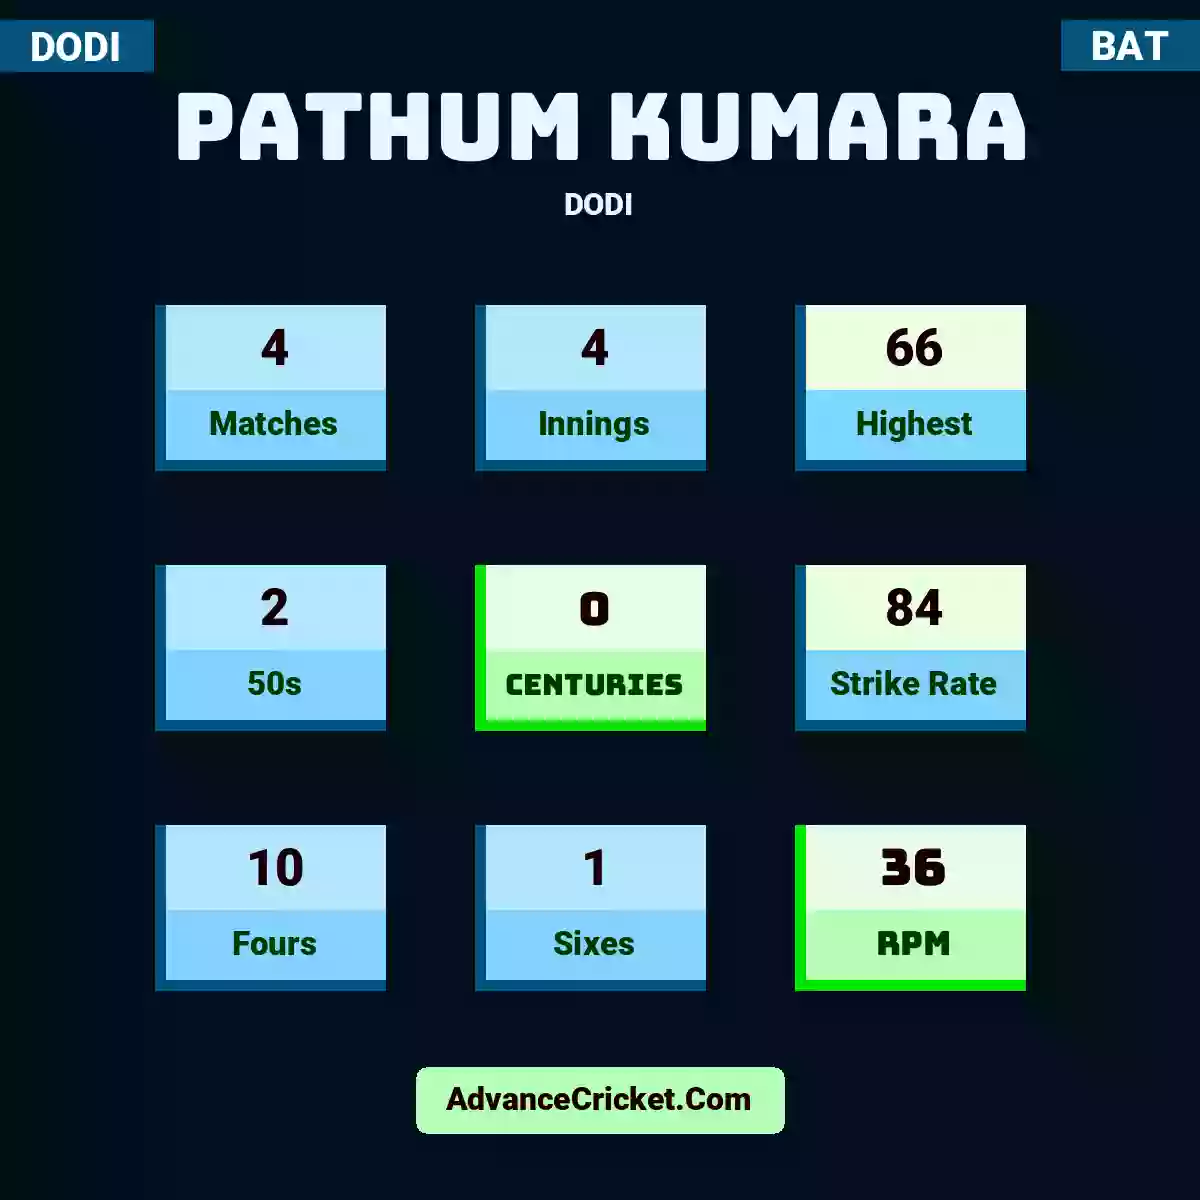 Pathum Kumara DODI , Pathum Kumara played 4 matches, scored 66 runs as highest, 2 half-centuries, and 0 centuries, with a strike rate of 84. P.Kumara hit 10 fours and 1 sixes, with an RPM of 36.